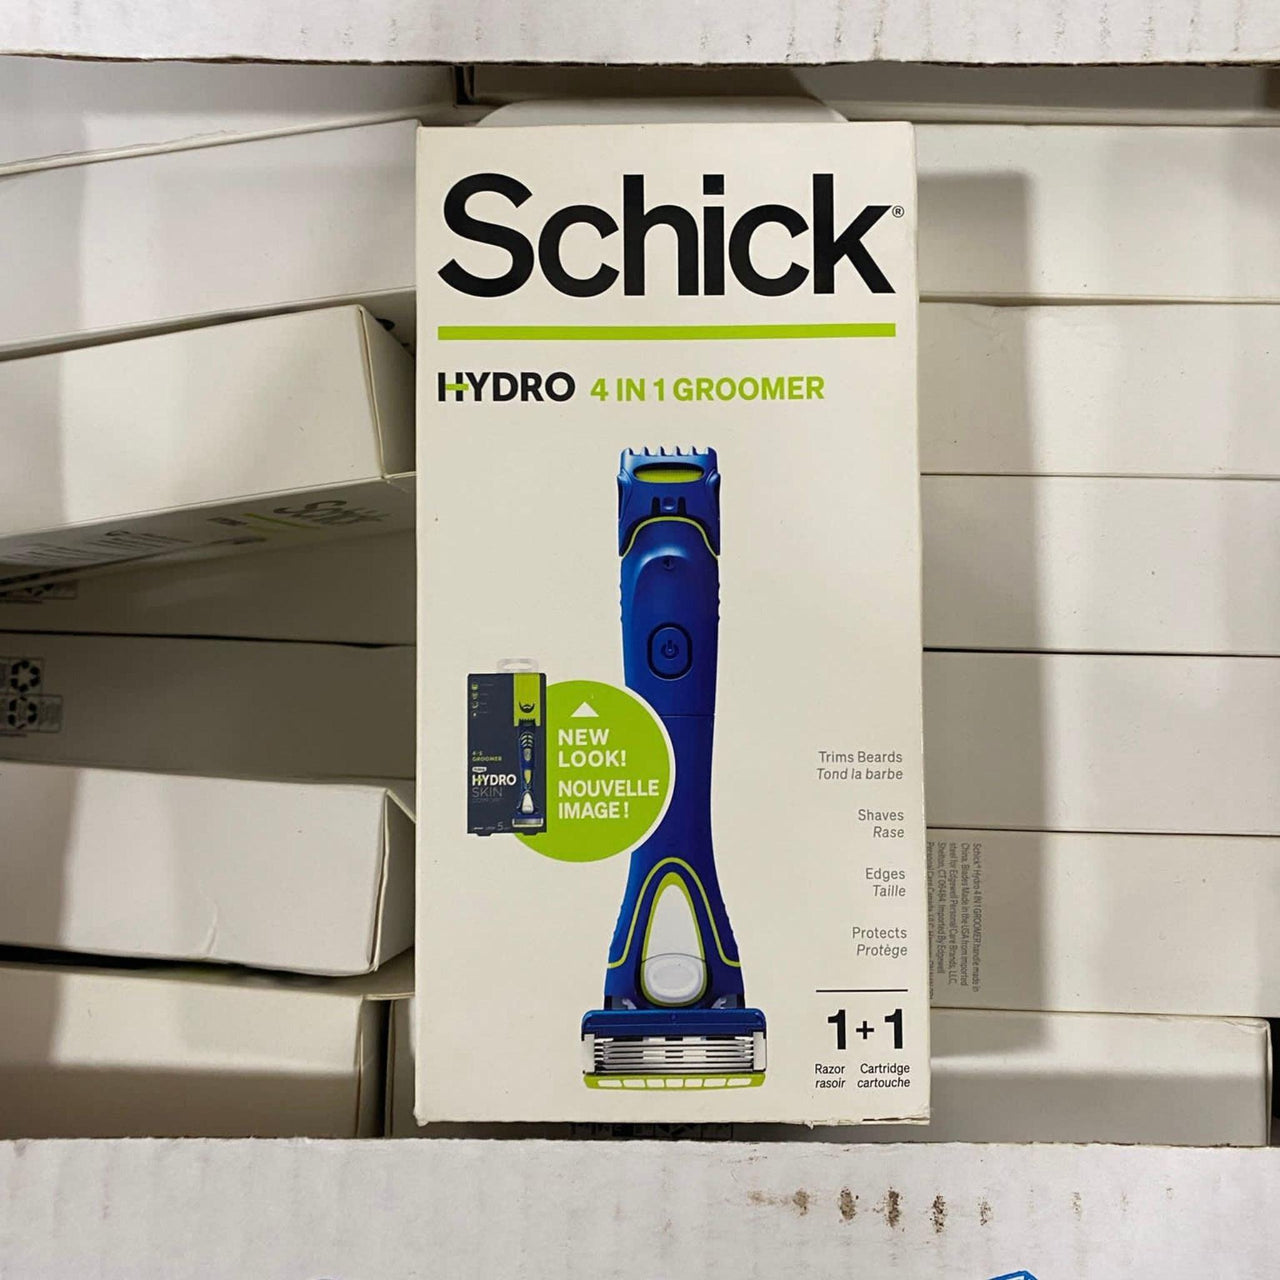 Schick Hydro 4 in 1 Groomer 1 Razor +1 Cartridge (50 Pcs Lot) - Discount Wholesalers Inc